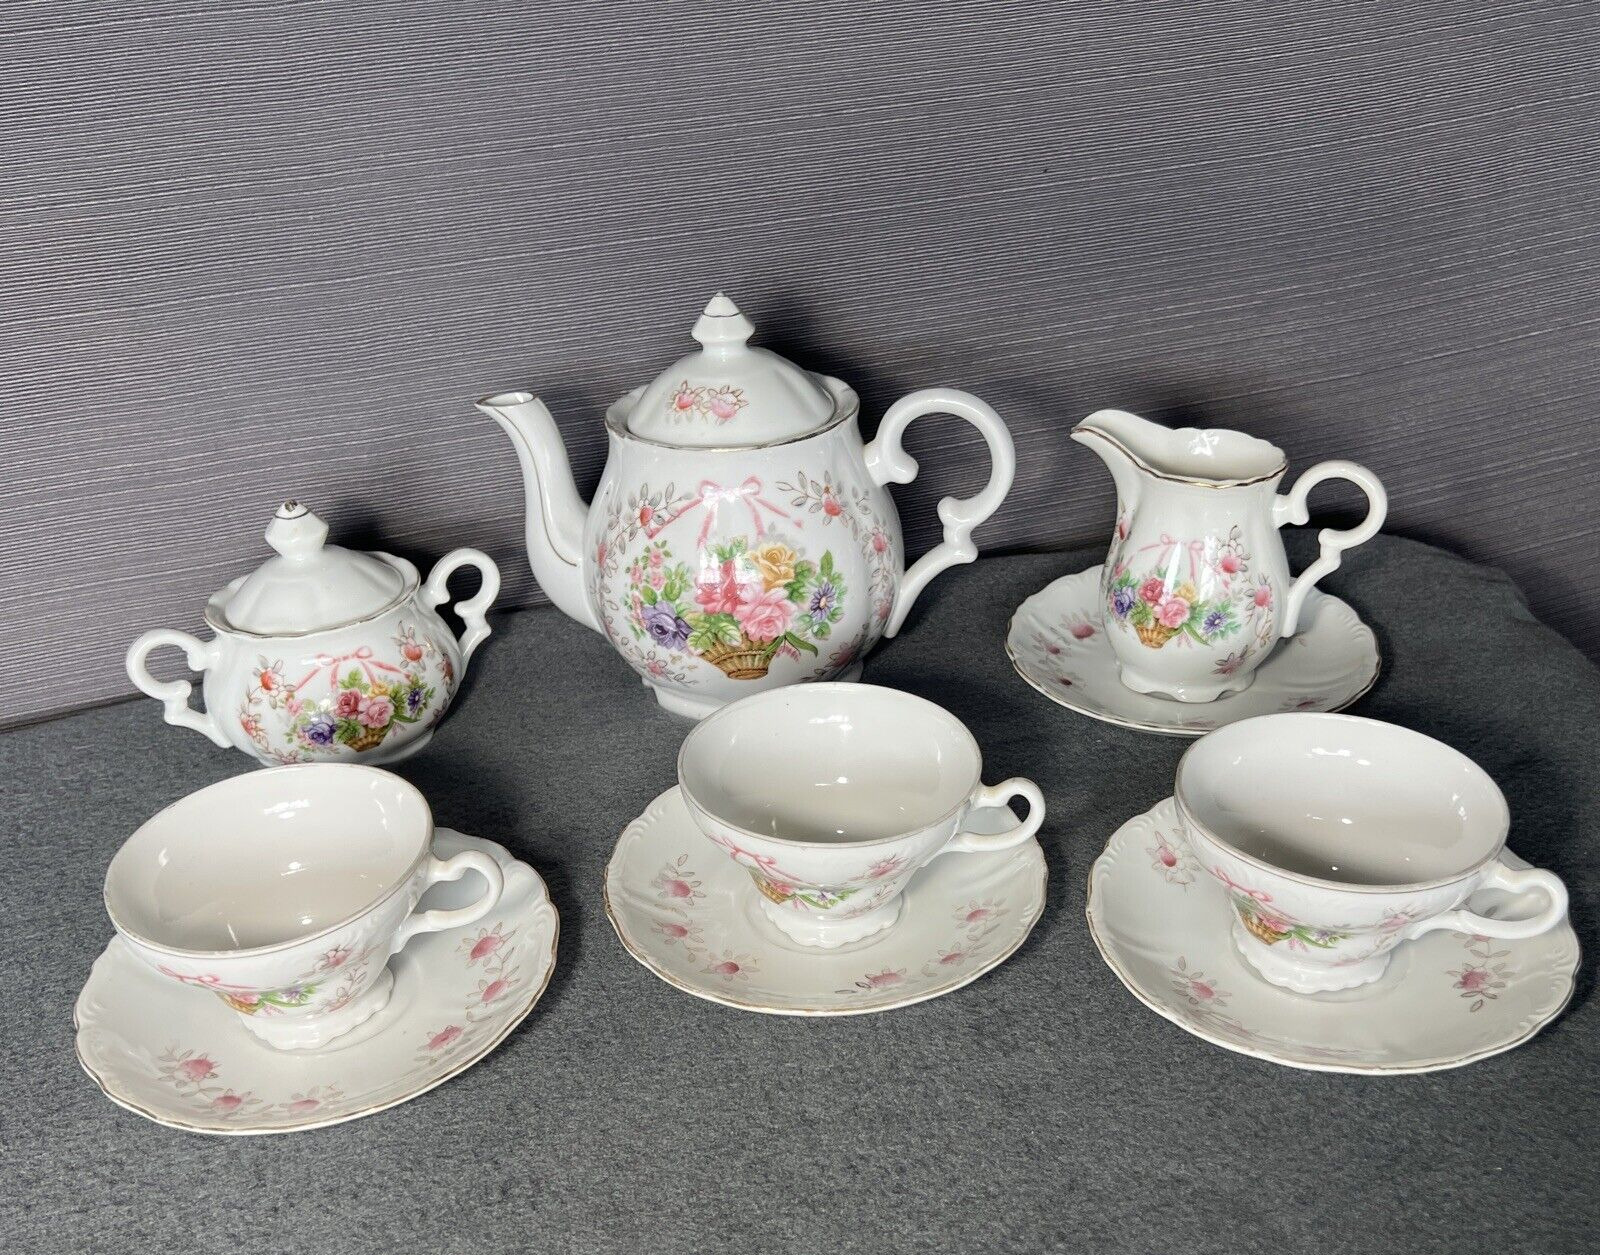 Vintage Lipper and Mann Tea Set TeaPot Cups Saucers Sugar & Creamer Bowl Floral